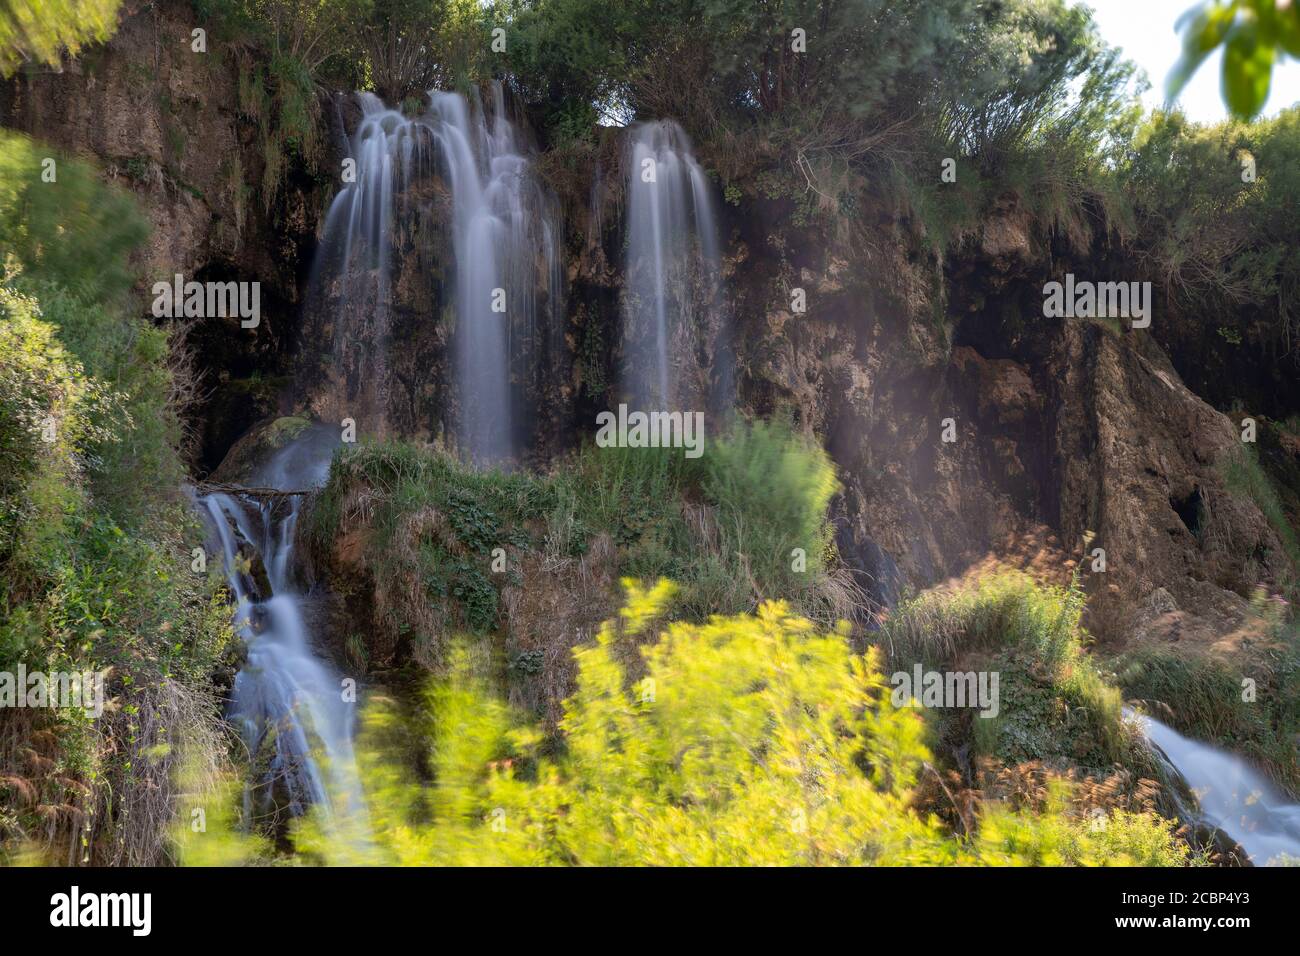 Girlevik waterfalls in Erzincan City of Eastern Turkey Stock Photo